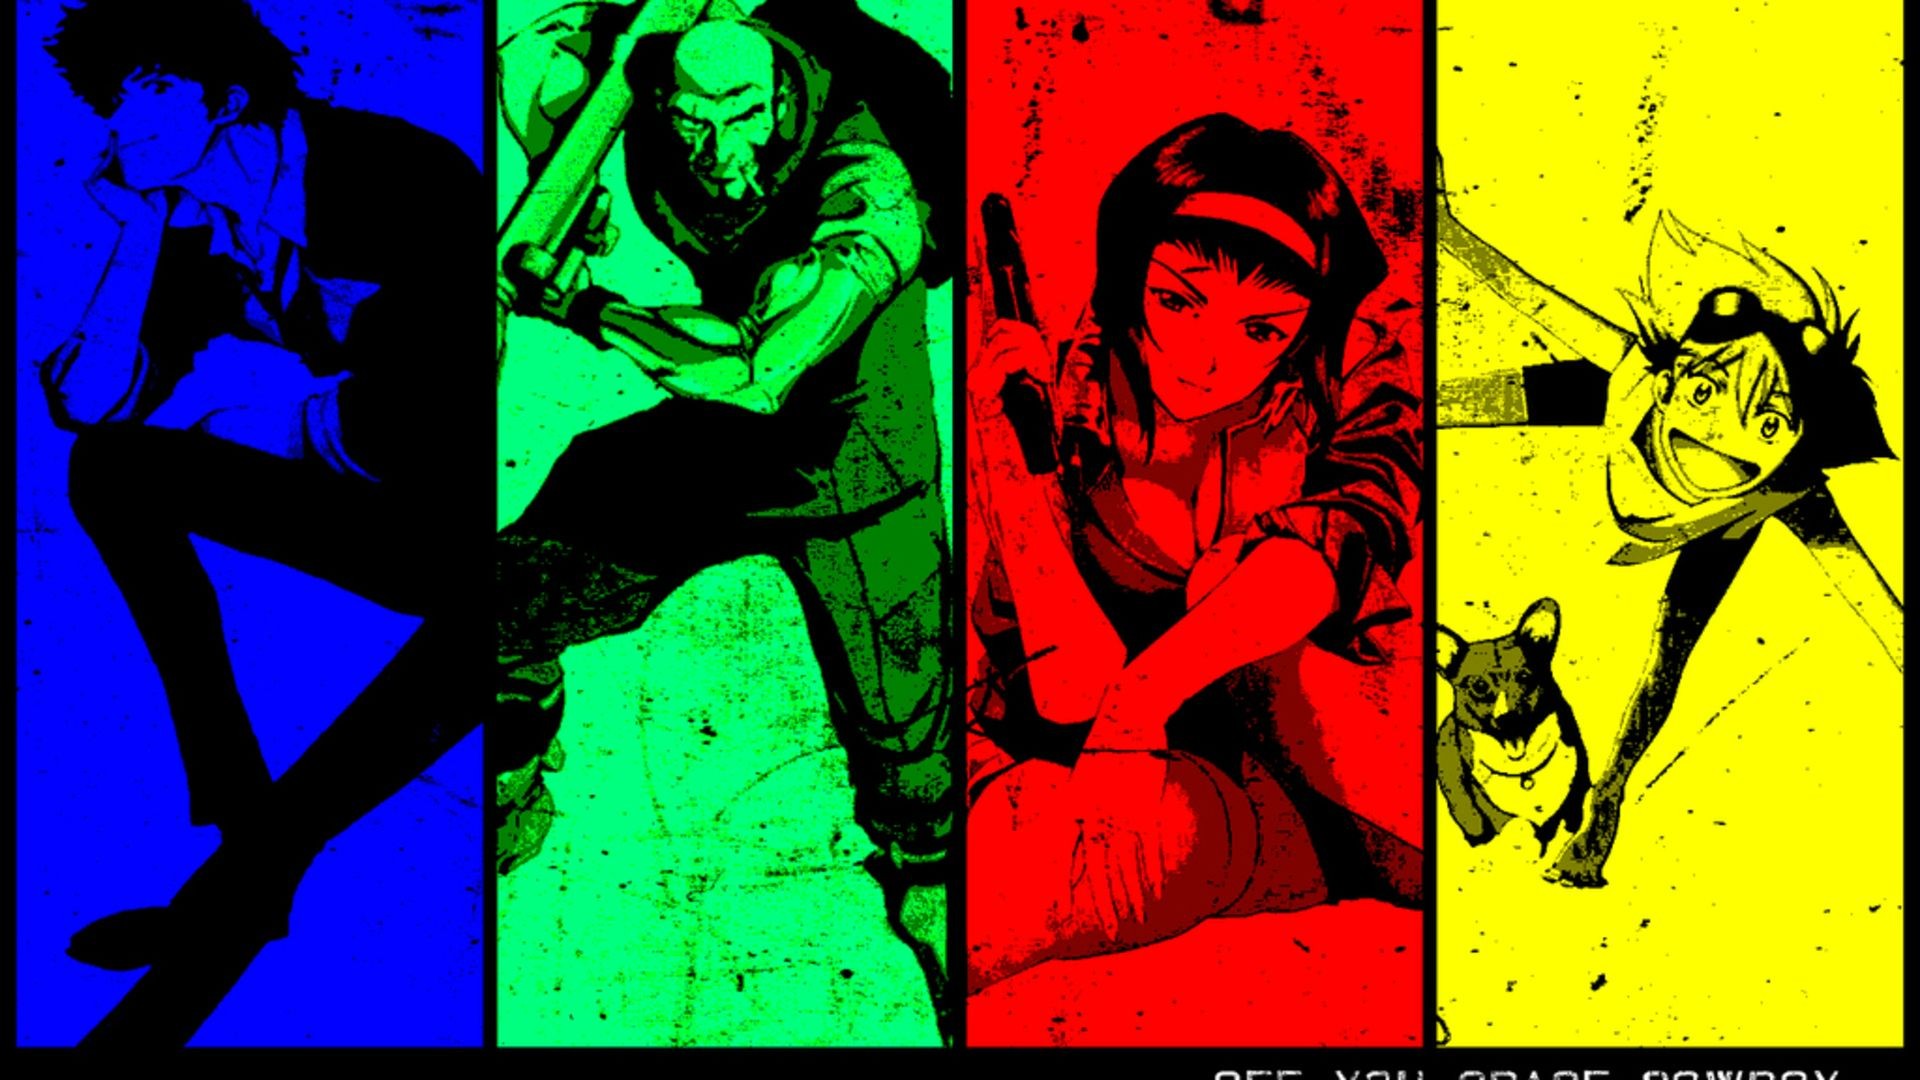 Cowboy Bebop wallpaper ·① Download free amazing High Resolution backgrounds for desktop and ...